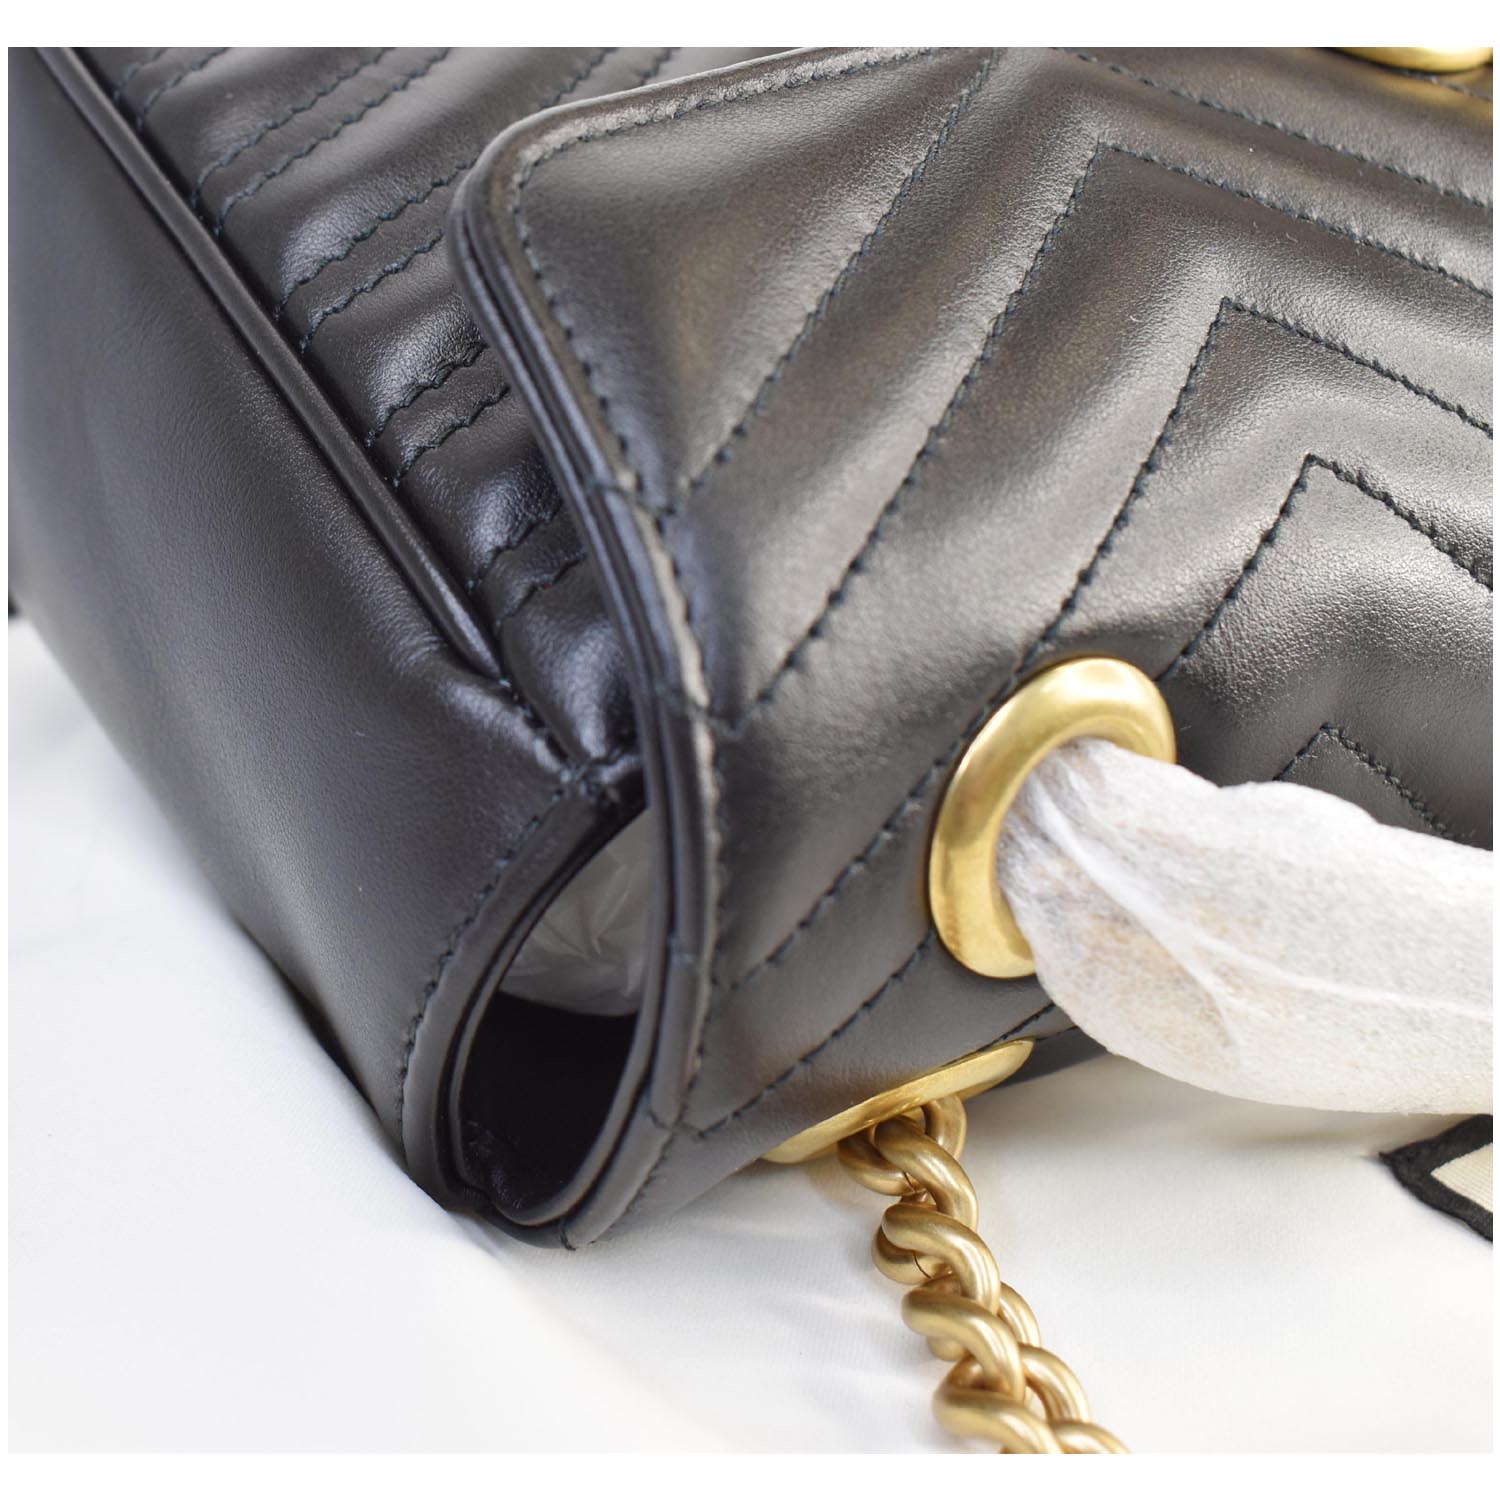 GUCCI GG Marmont Small Matelasse Leather Crossbody Bag Black 443497